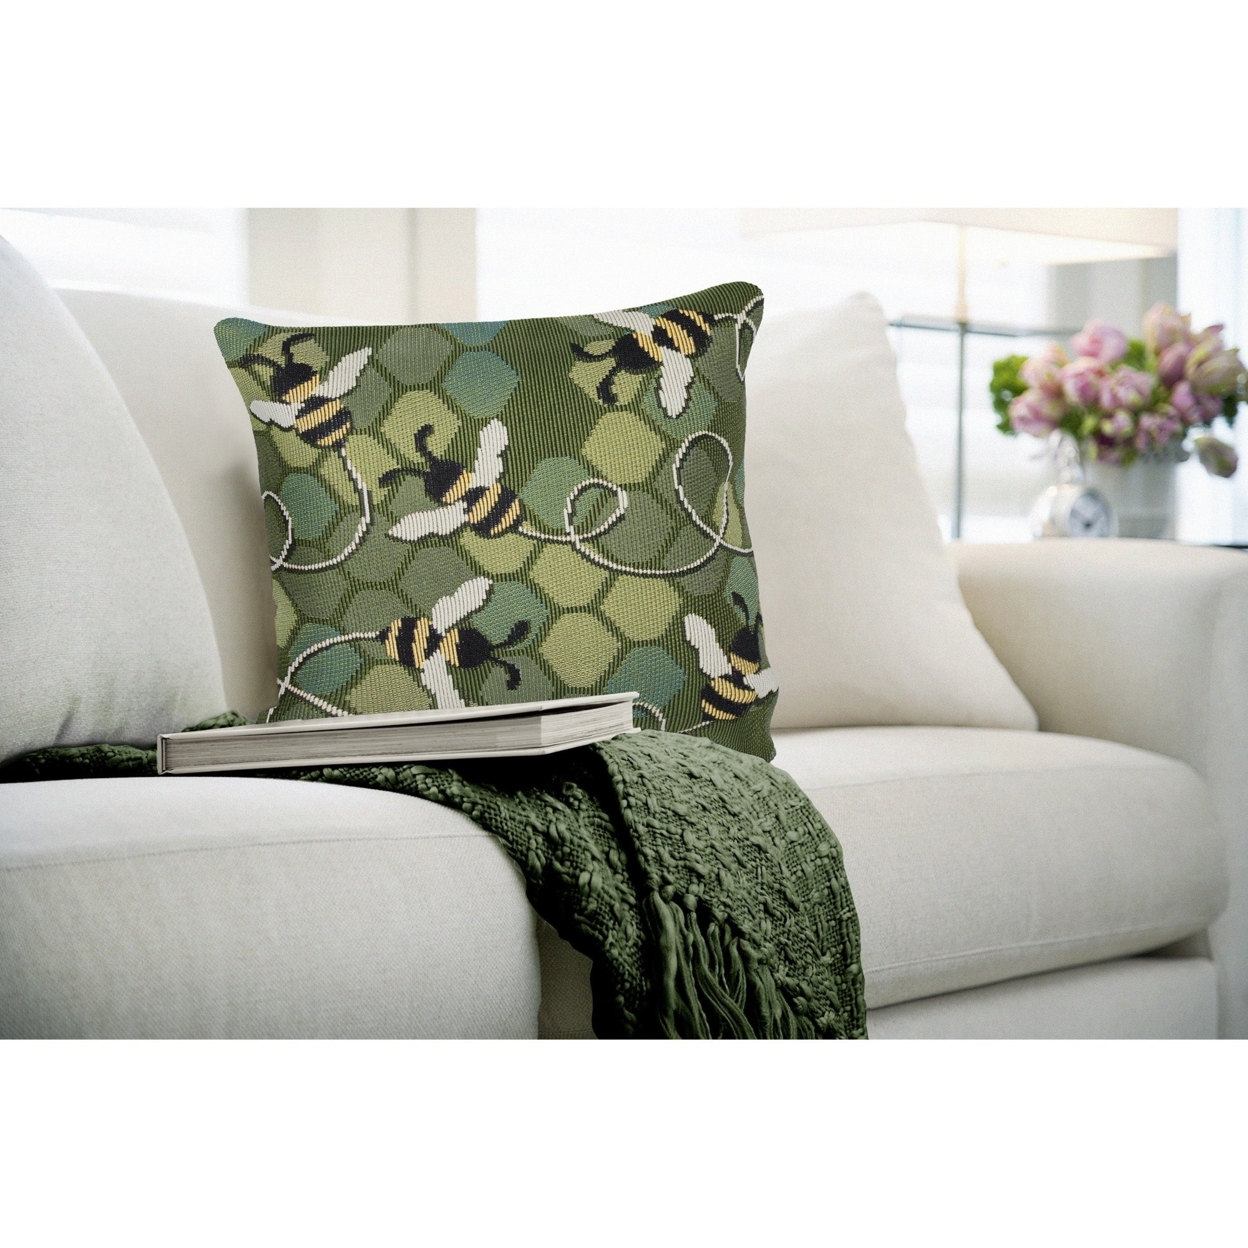 Liora Manne Marina Bee Free Indoor Outdoor Decorative Pillow Green